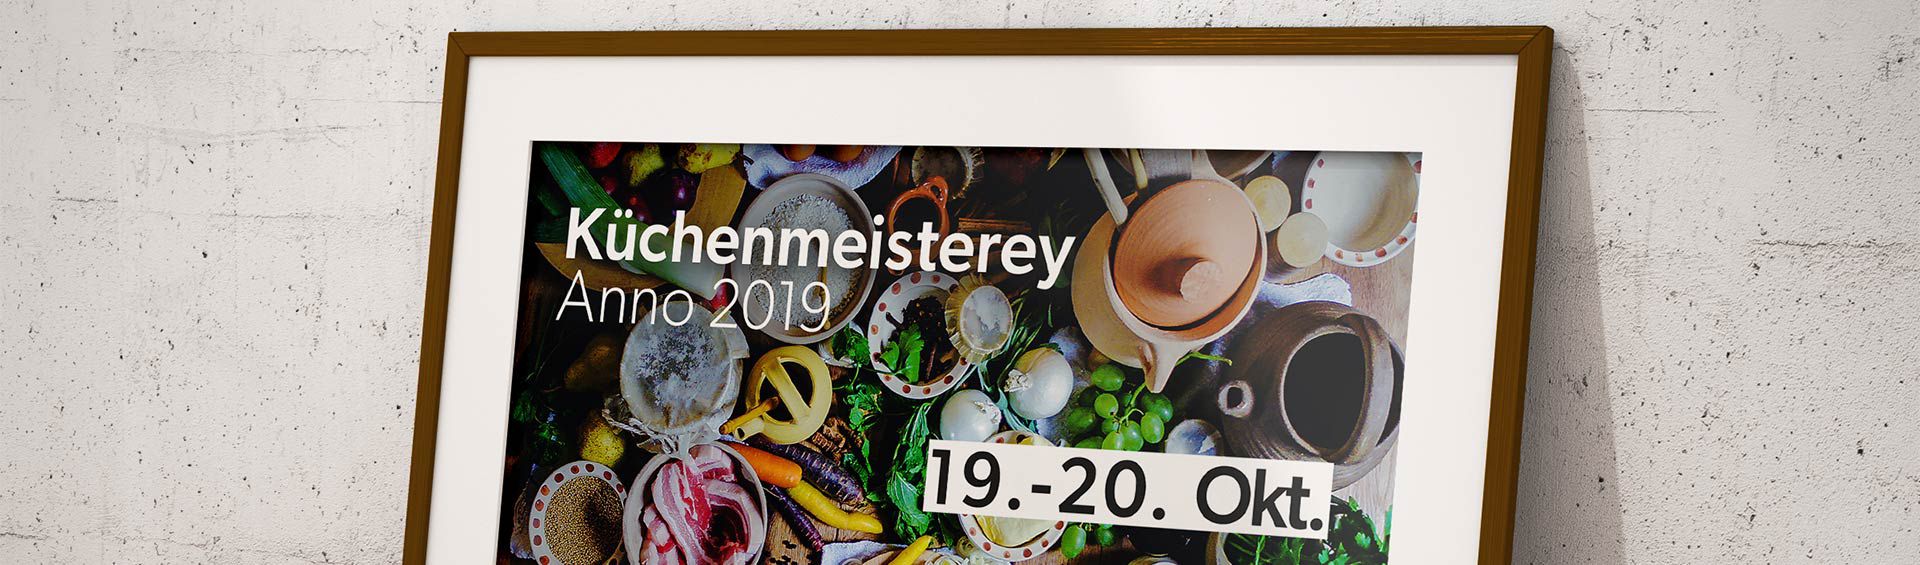 poster design for küchenmeisterey anno 2019